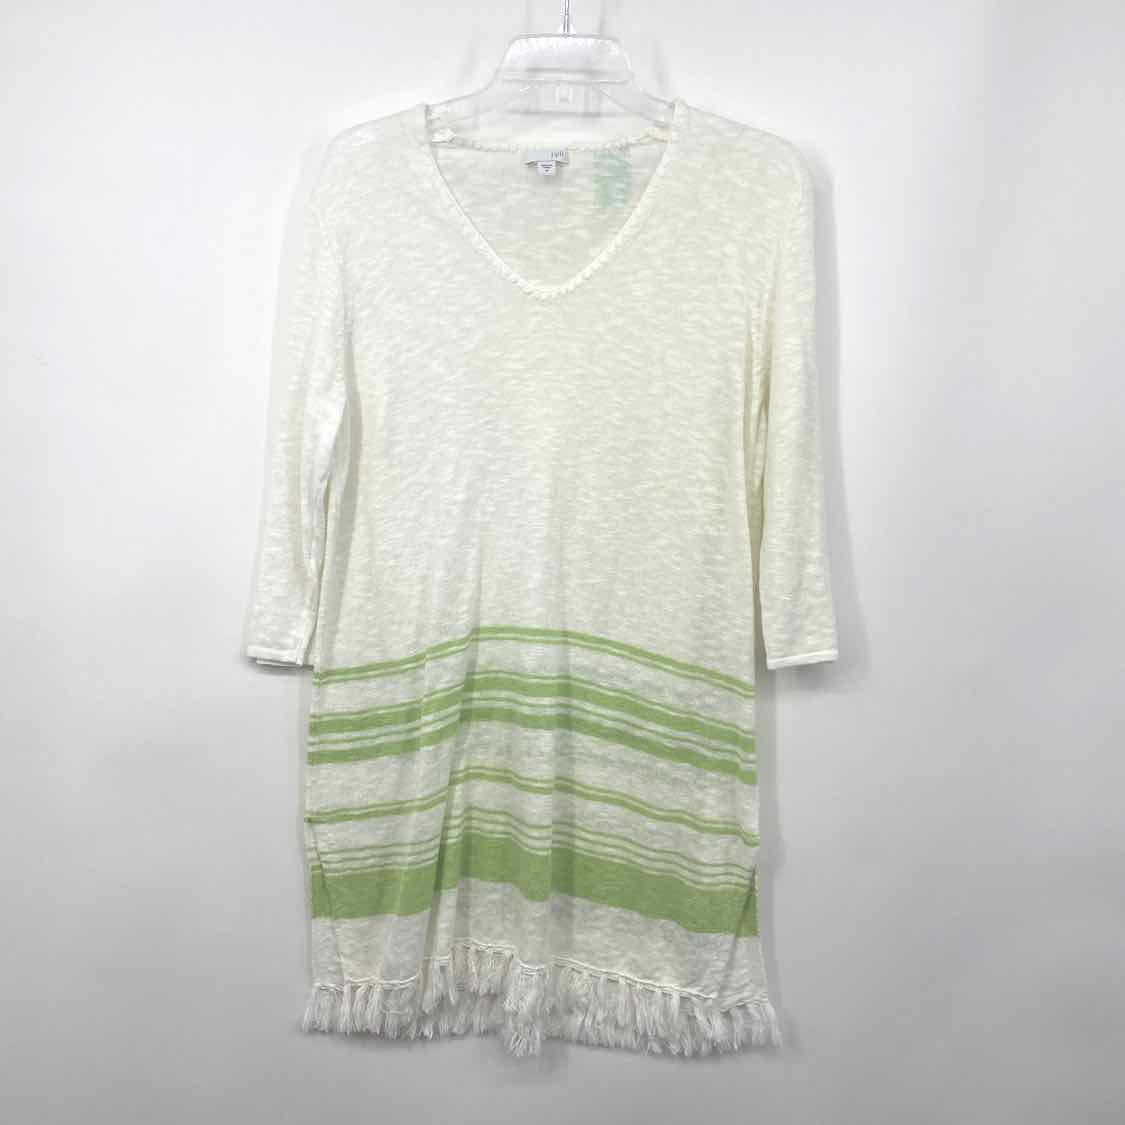 Size MEDIUM J. JILL Wine Green Stripe Sweater – Shop Prior Attire